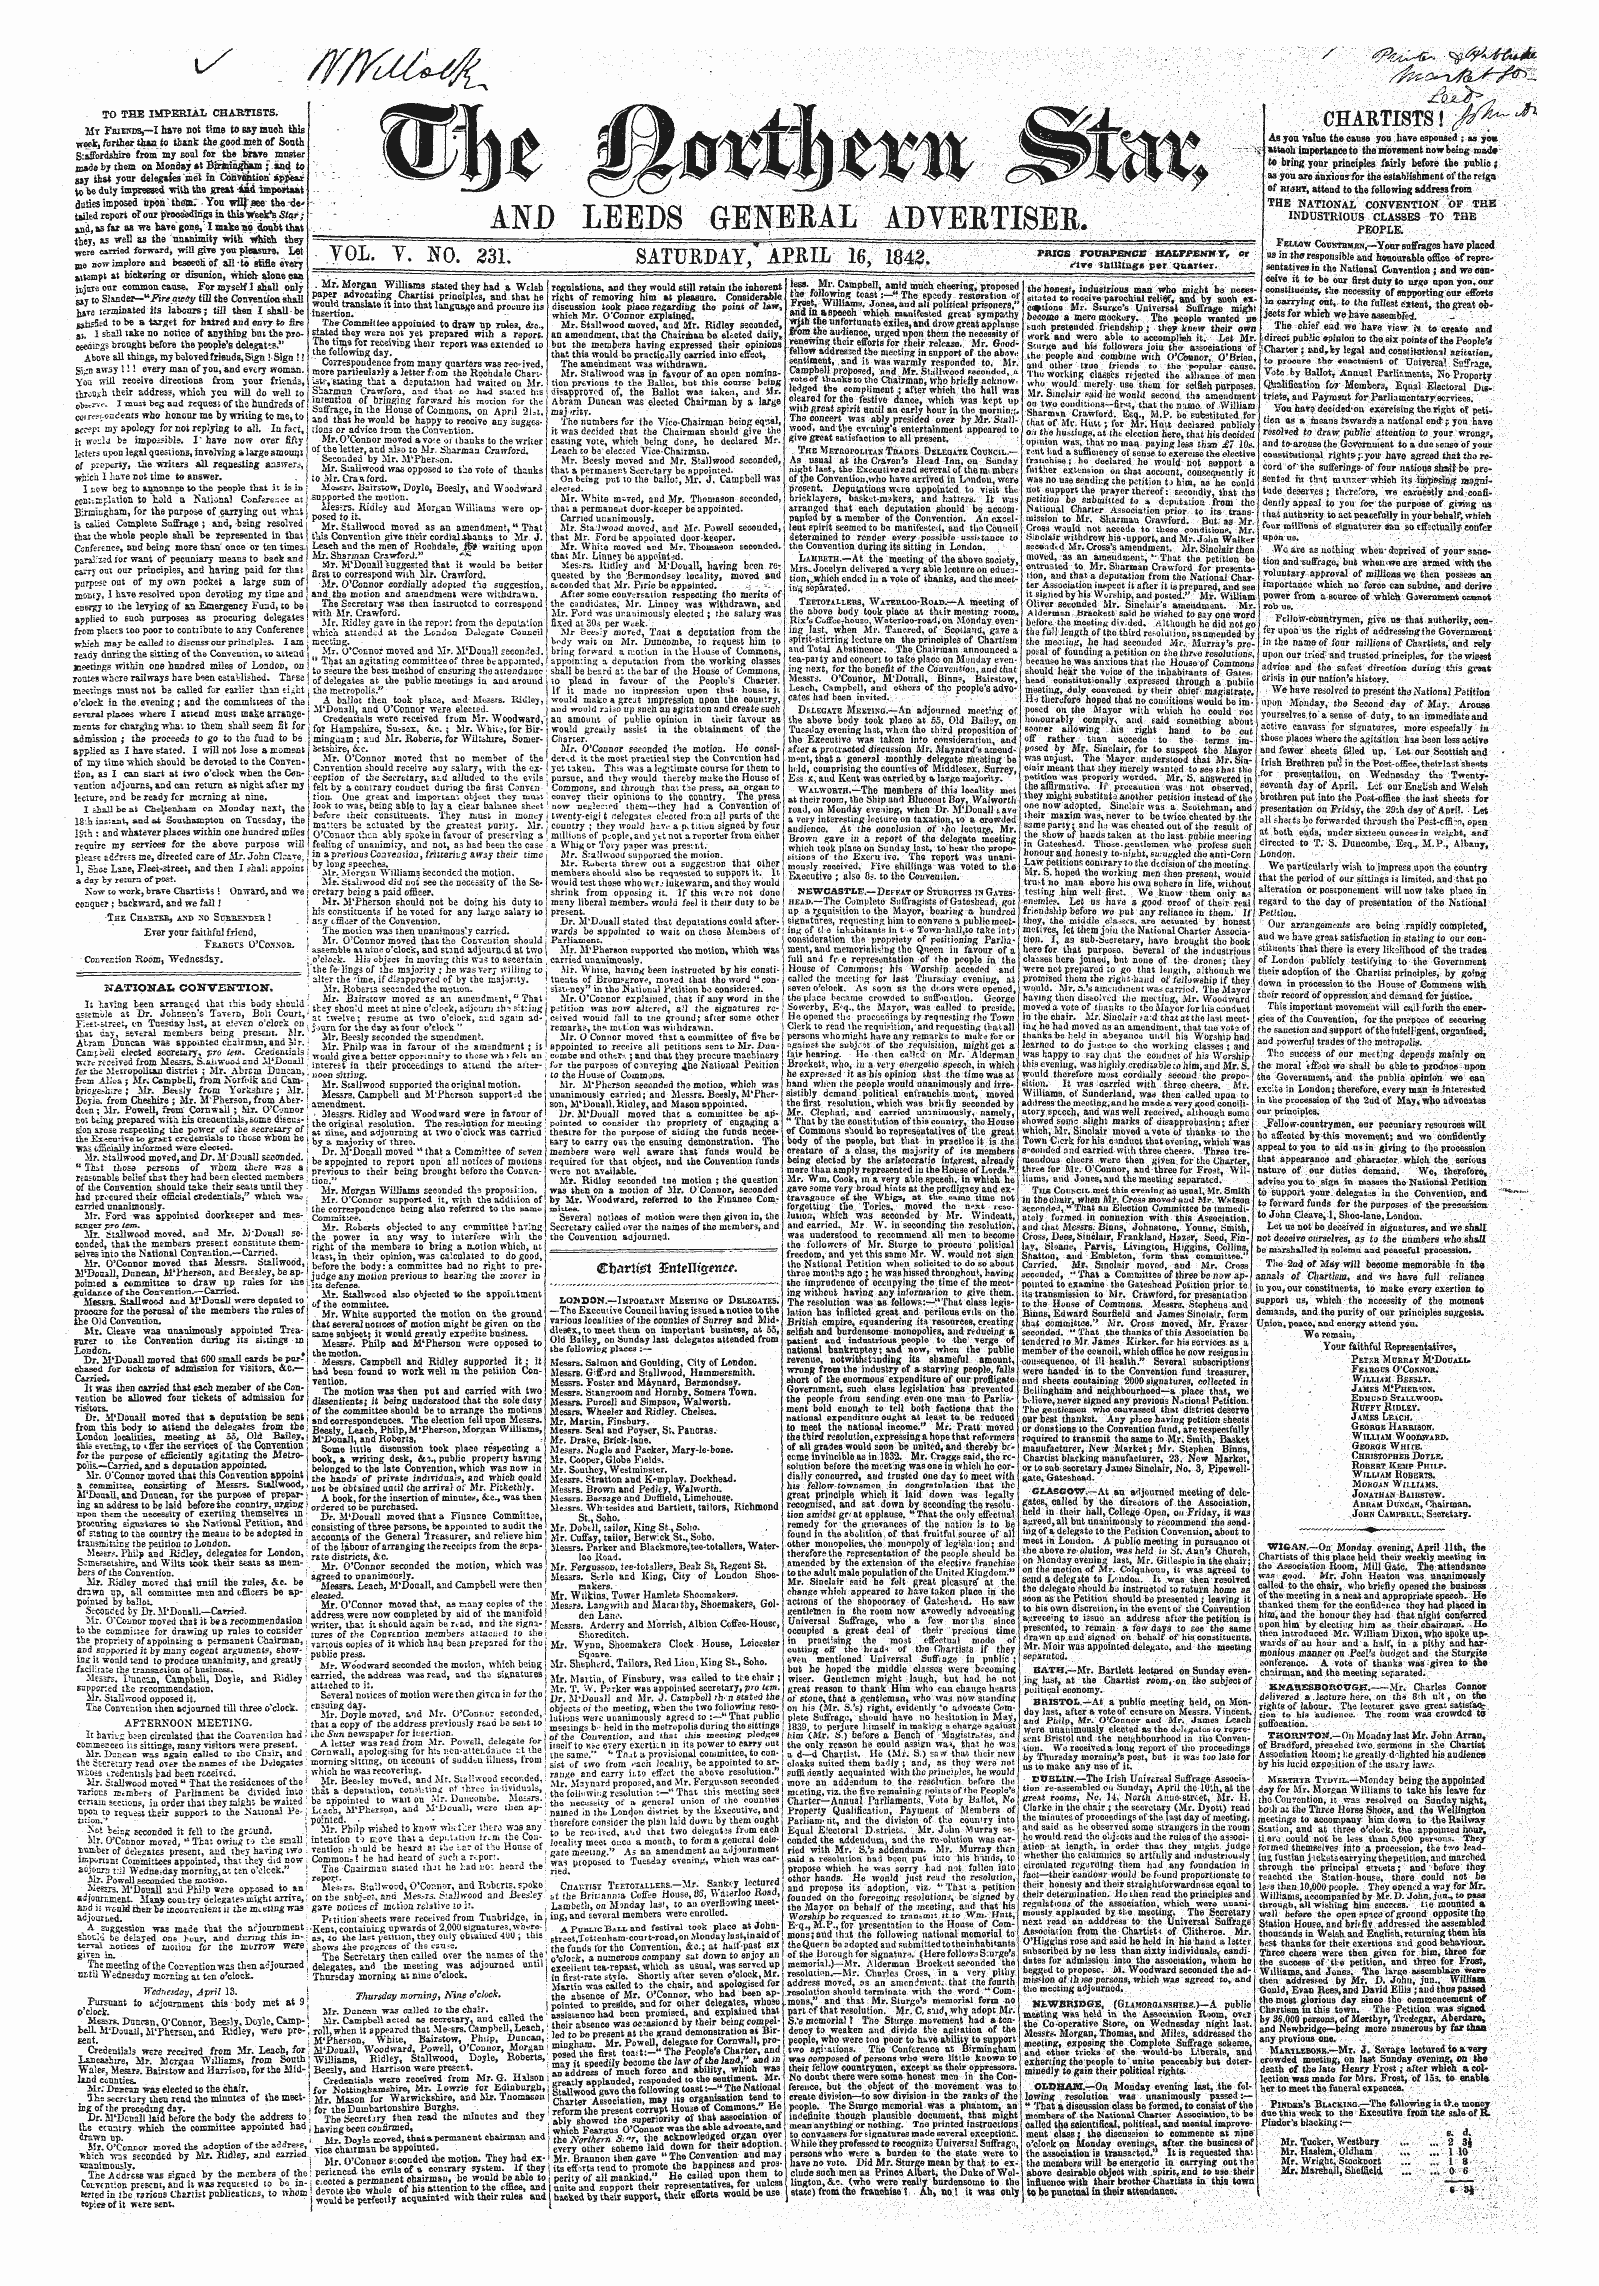 Northern Star (1837-1852): jS F Y, 5th edition: 1